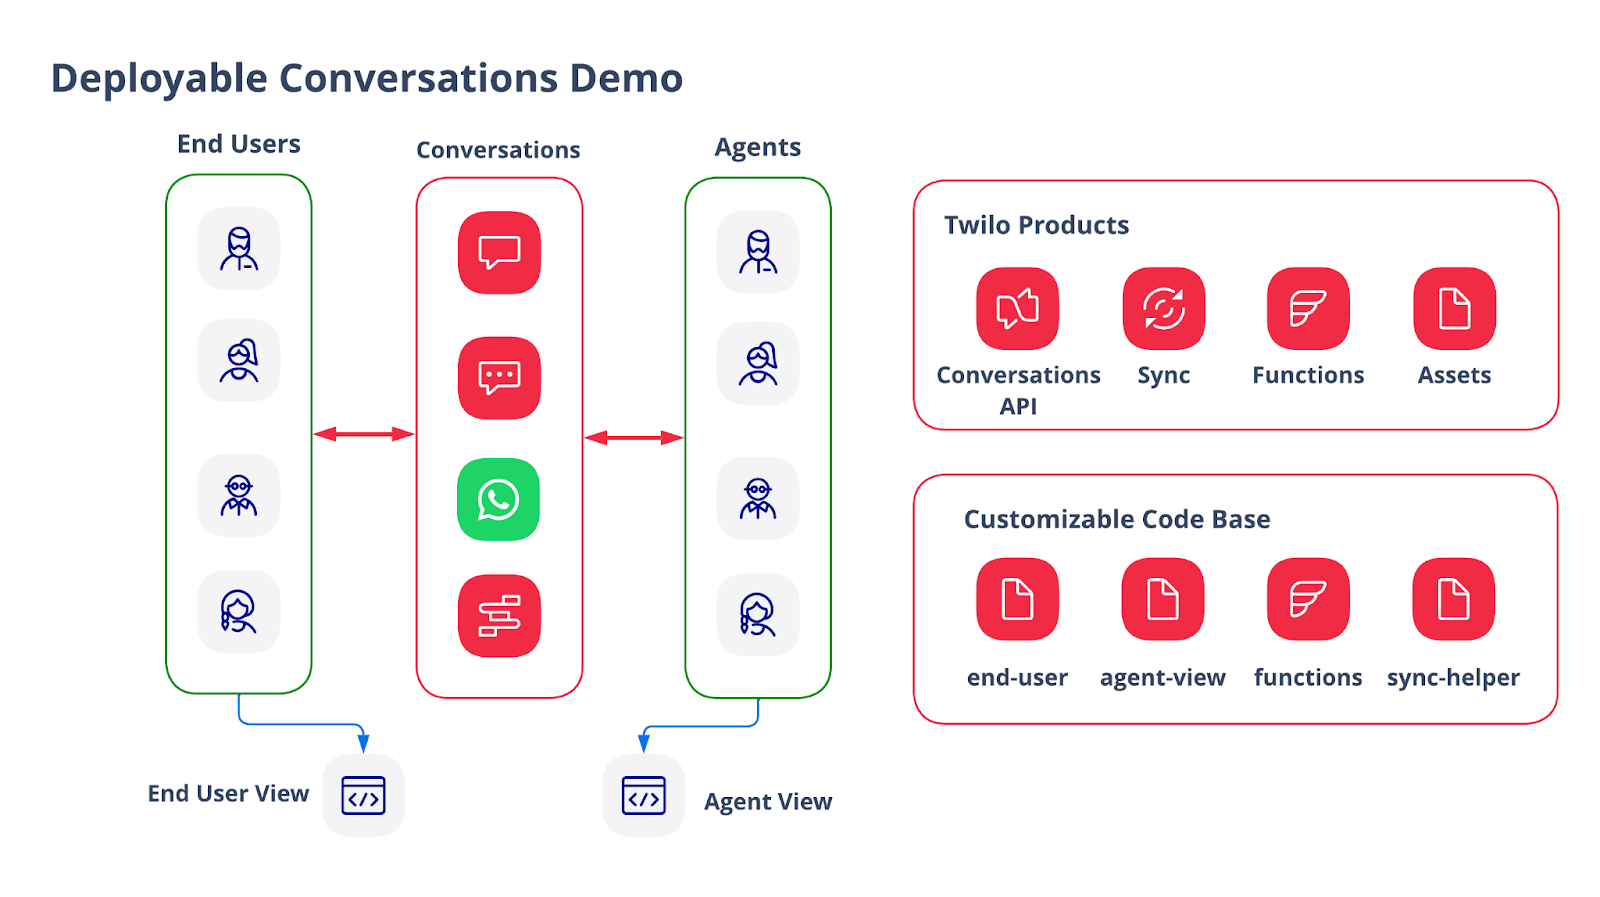 Deployable Conversations Demo architecture